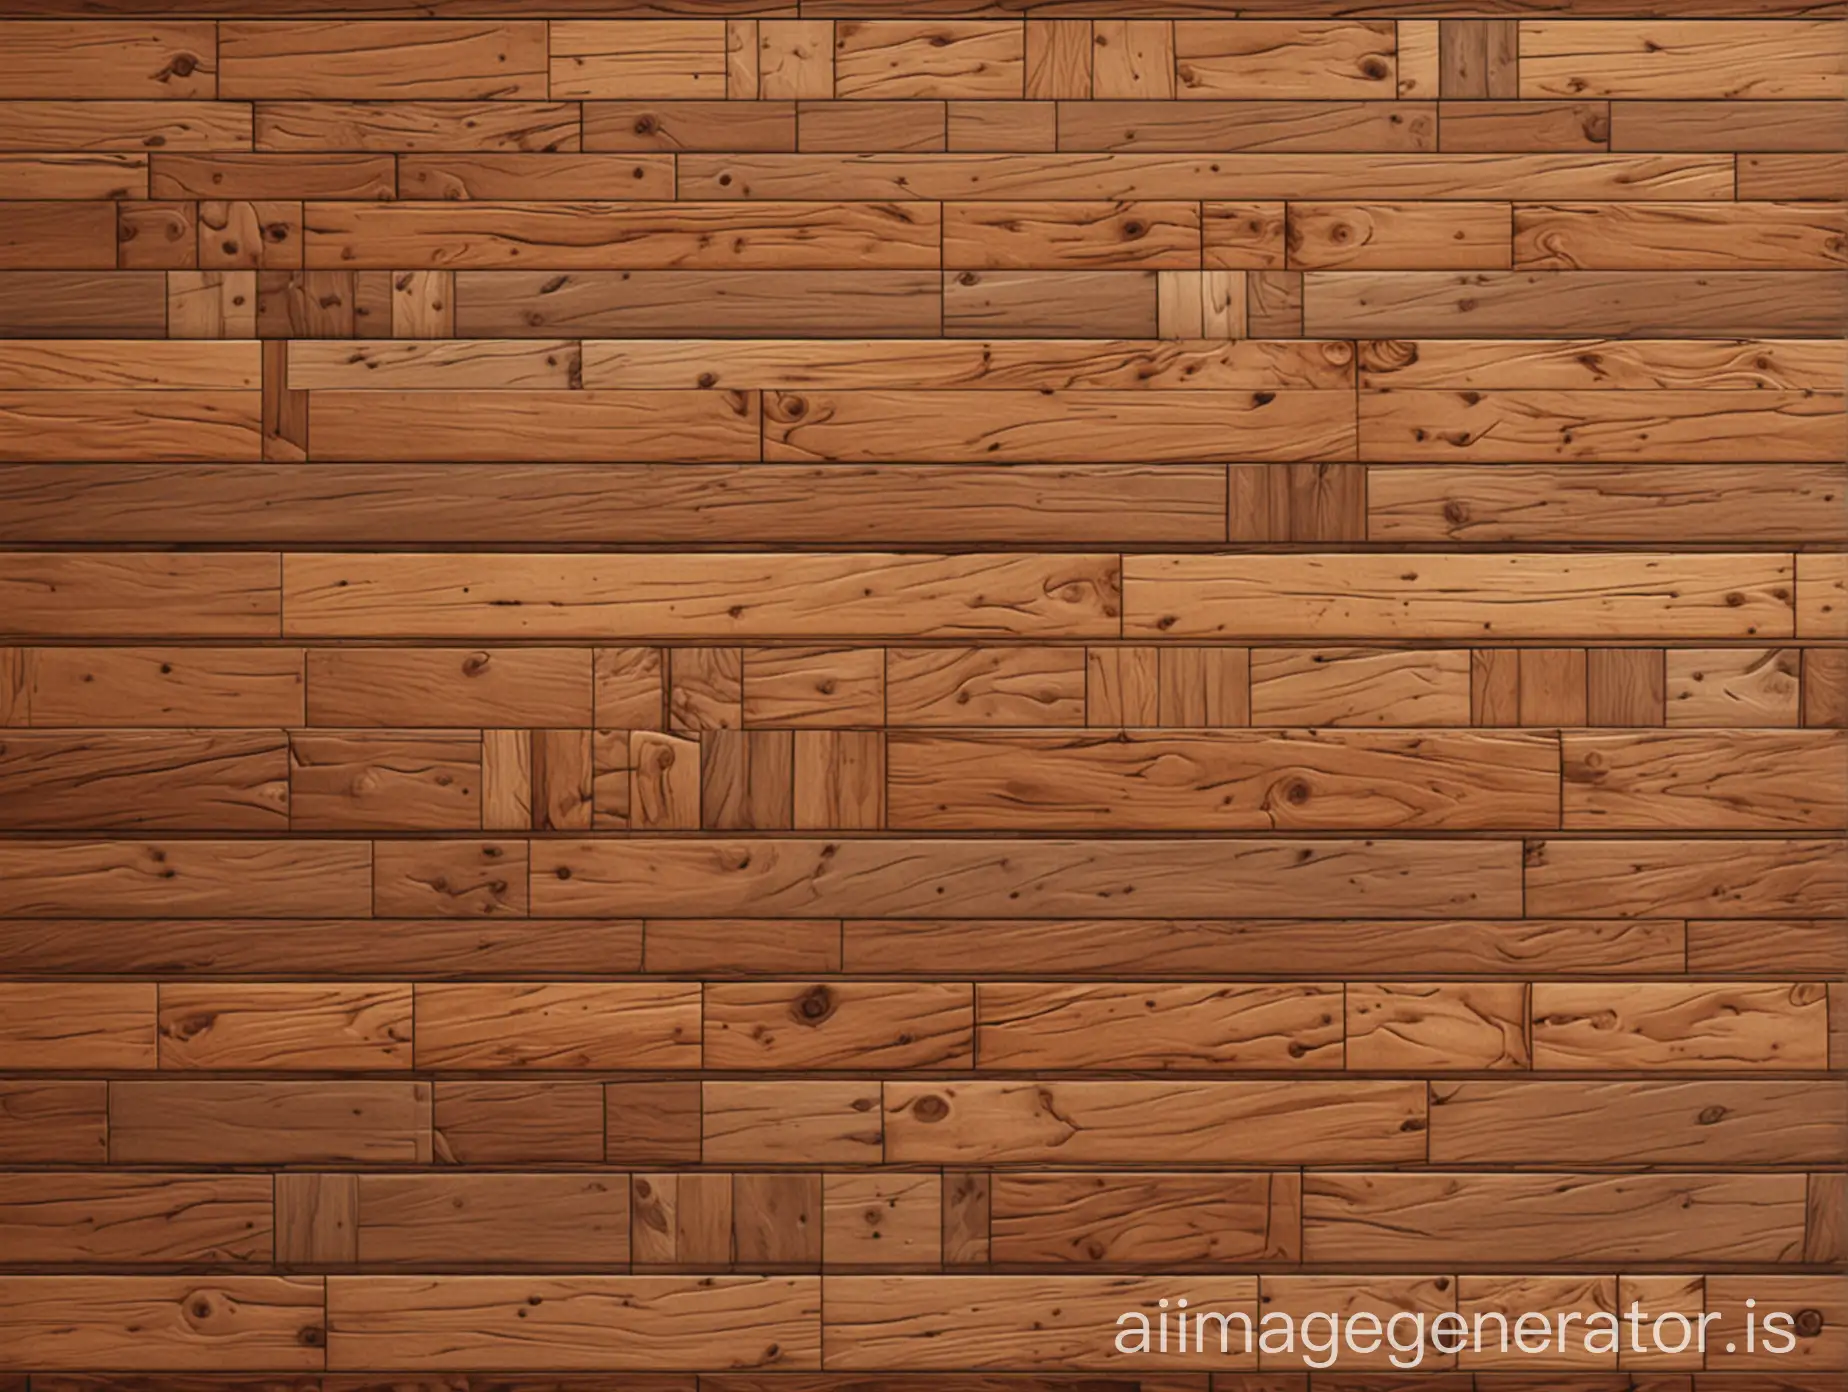 Pixel-Art-Style-Wood-Floor-Scene-Without-Shadow